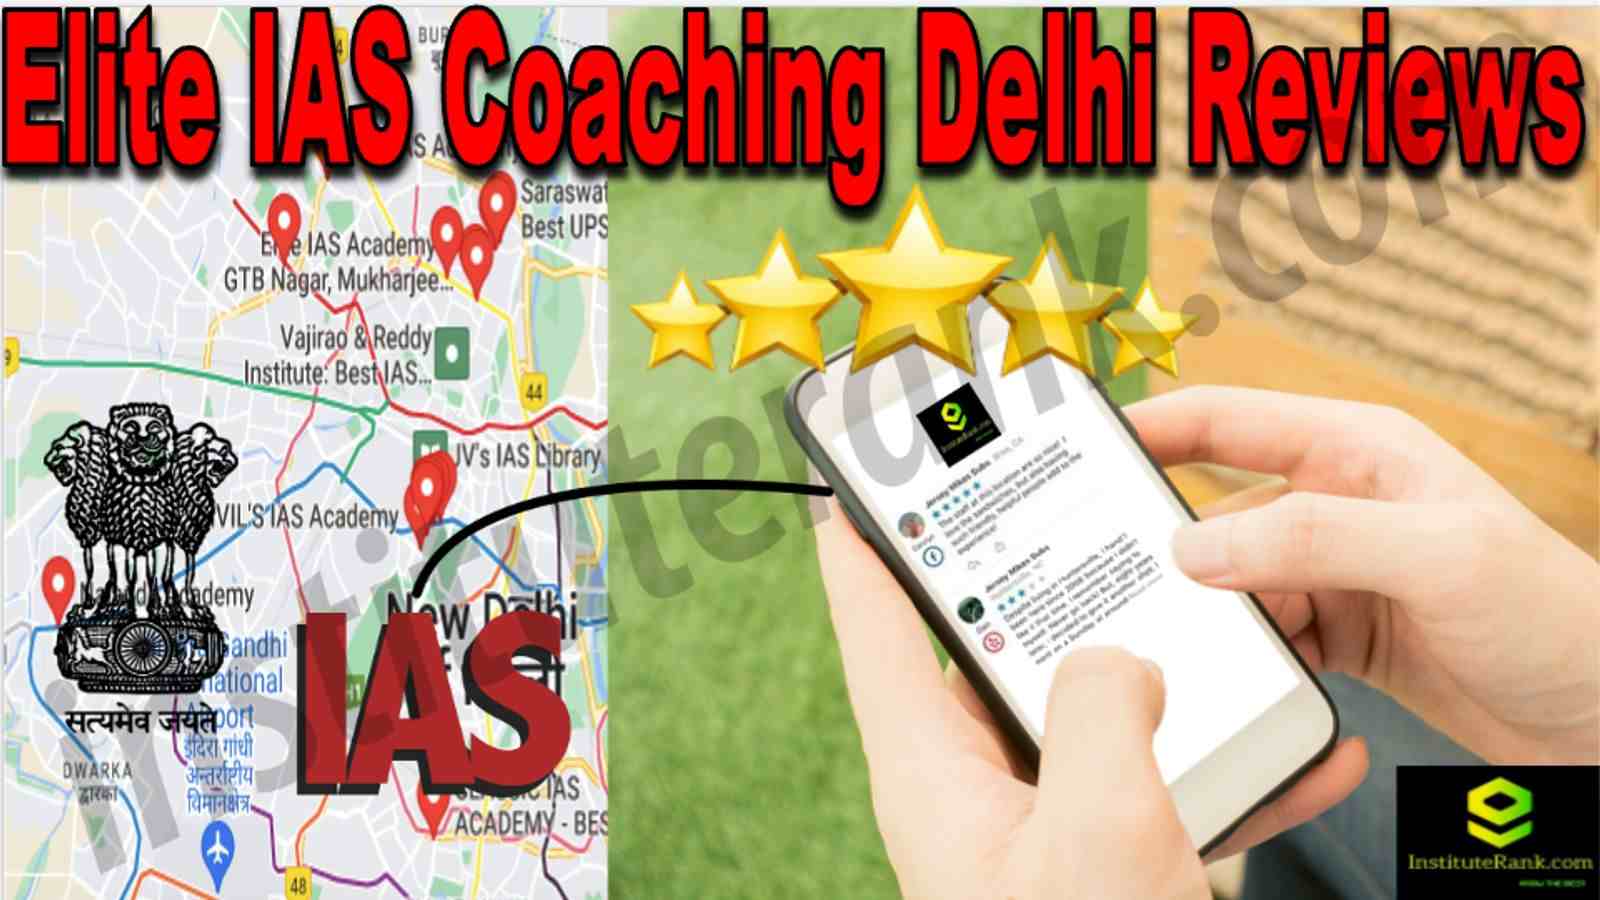 Elite IAS Coaching Delhi Reviews